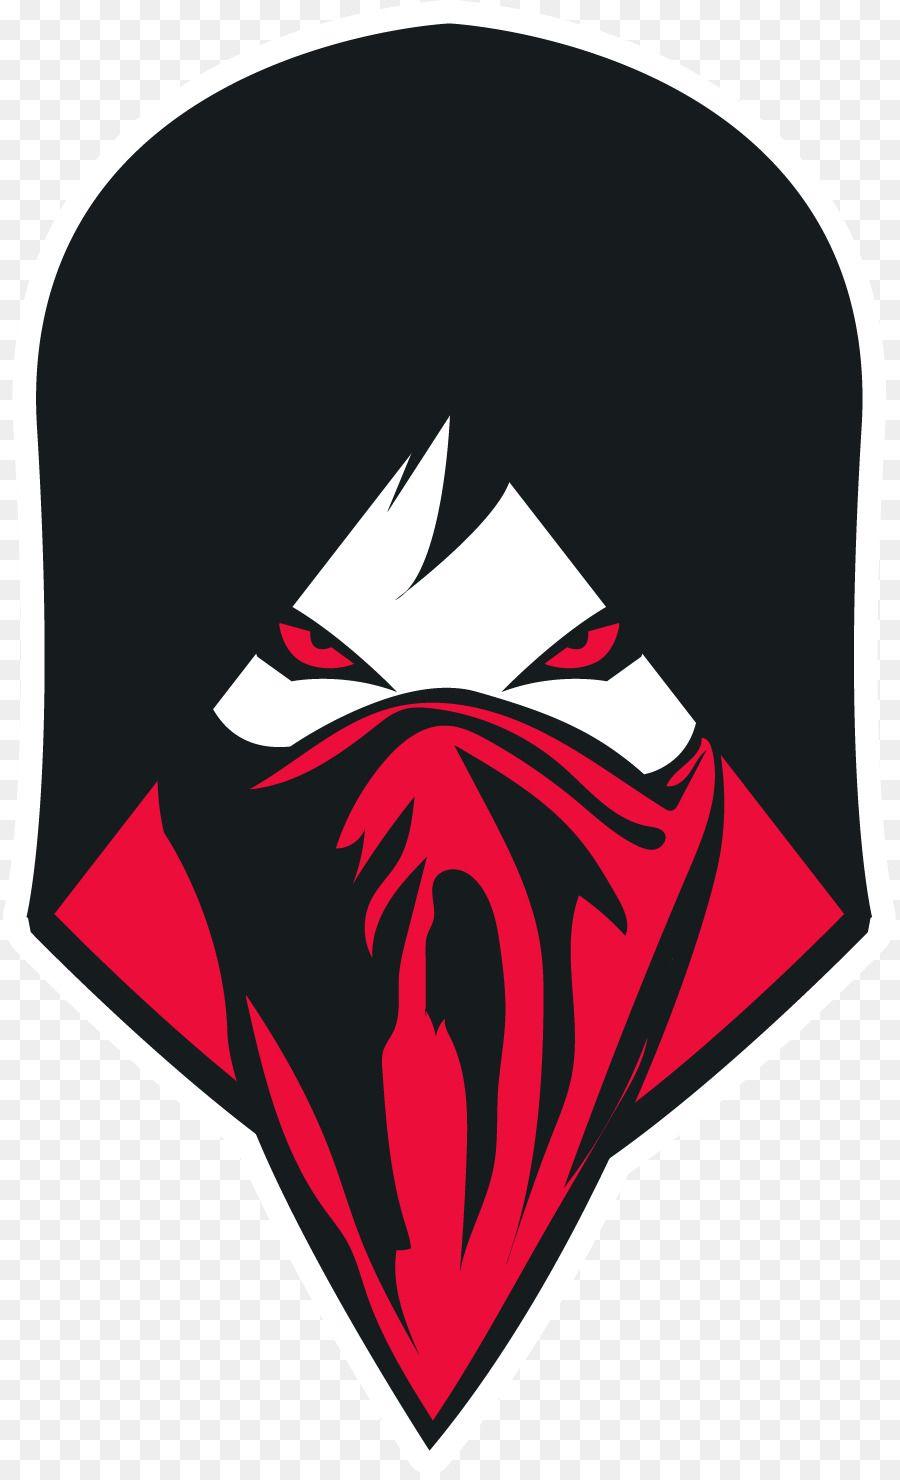 Red Minecraft Logo - League of Legends Electronic sports Minecraft Logo - logo esport png ...